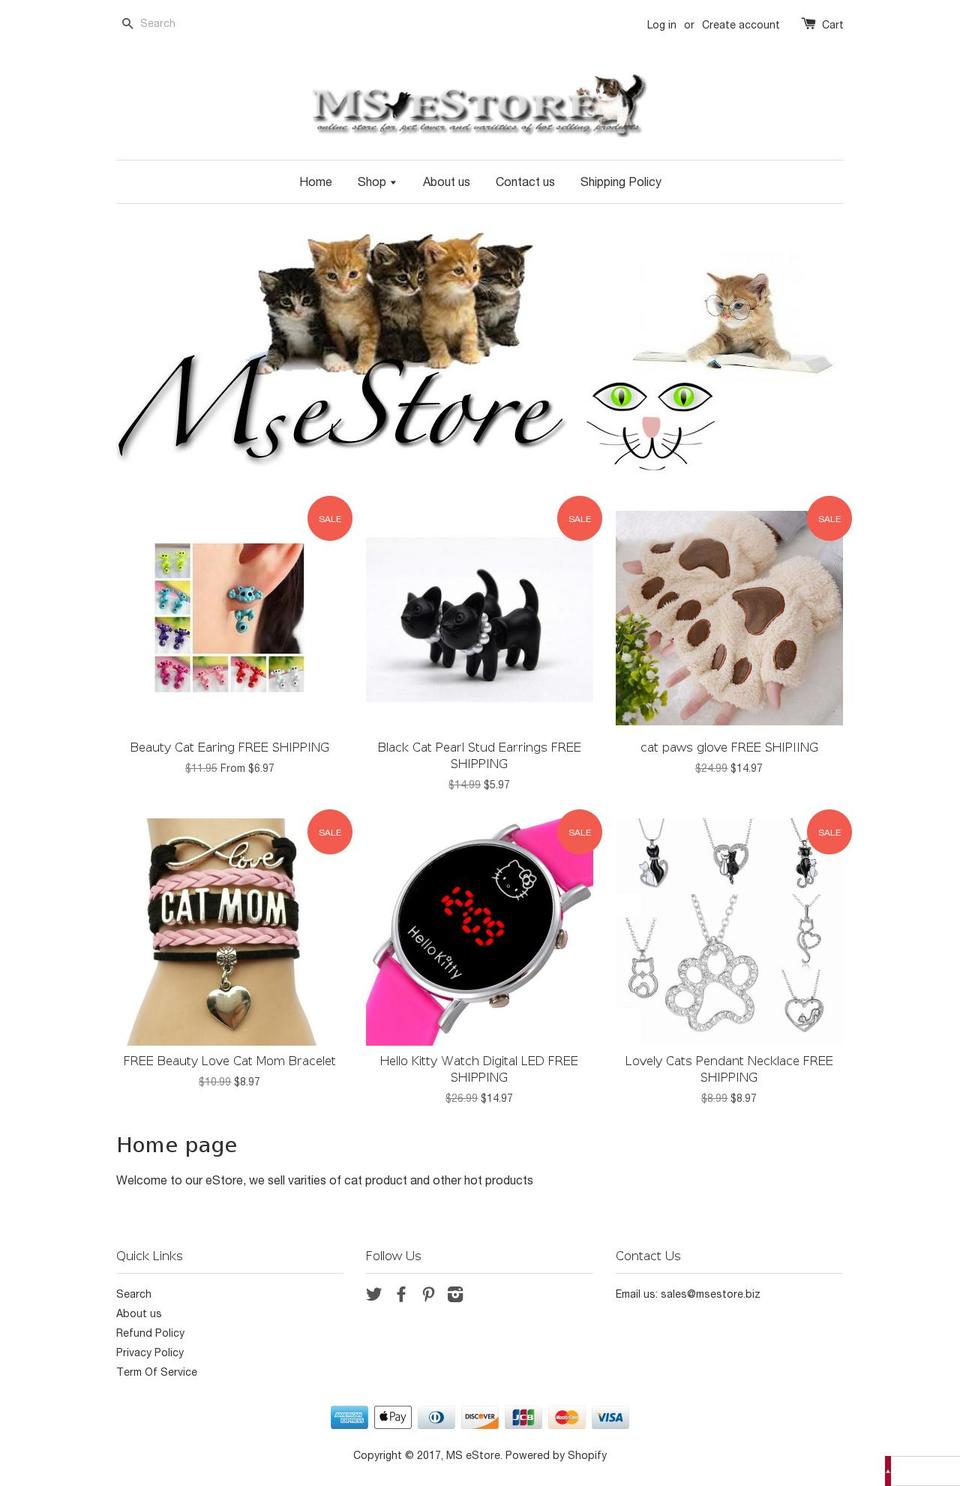 msestore.biz shopify website screenshot